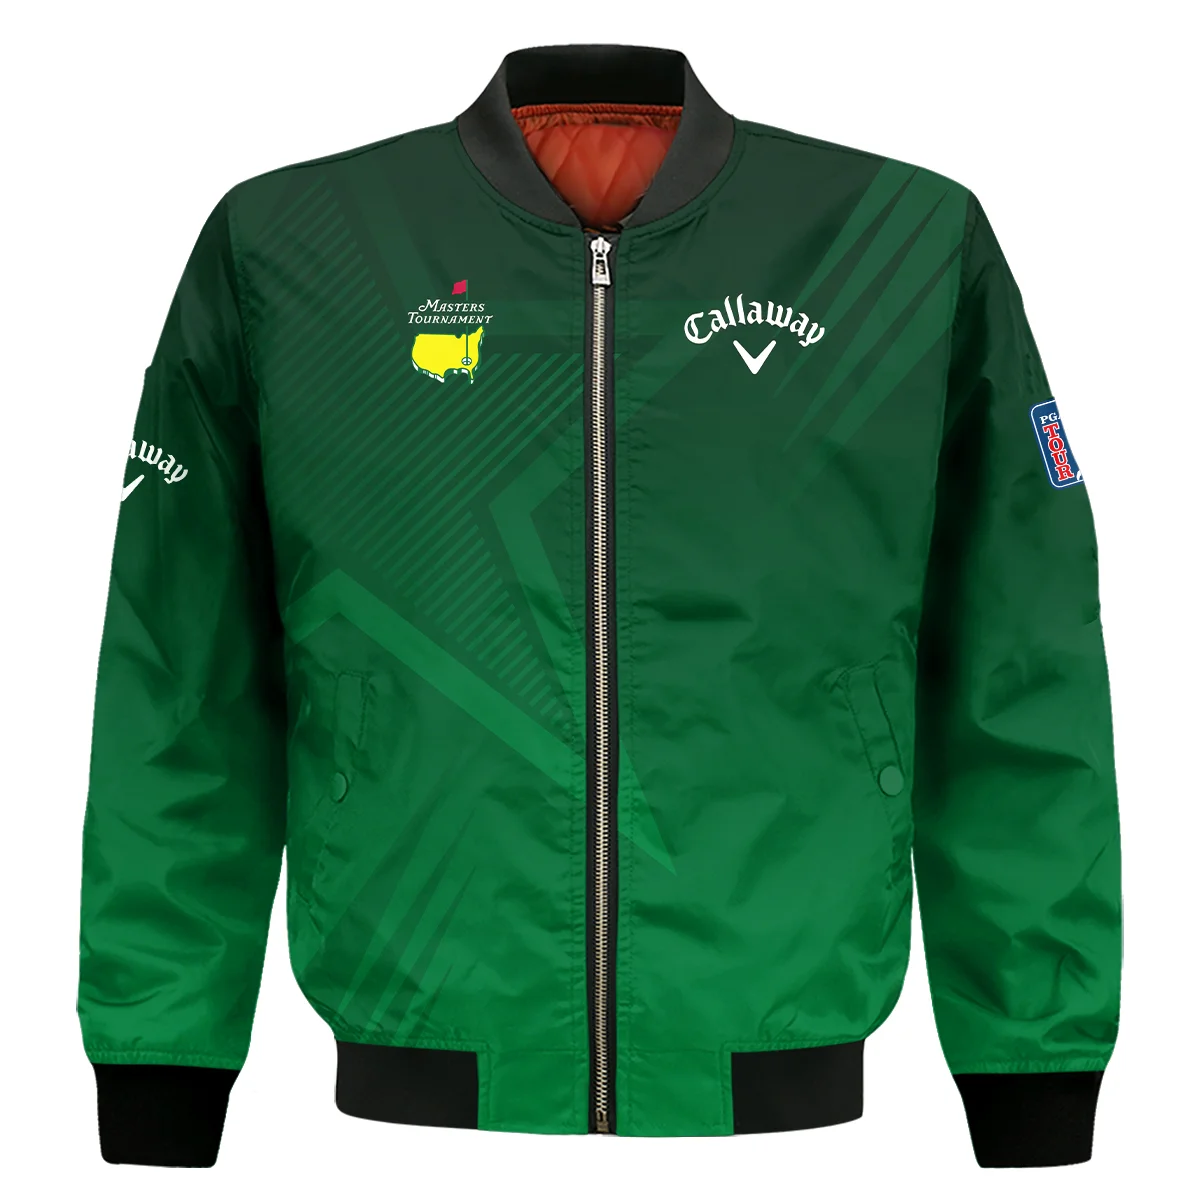 Callaway Masters Tournament Bomber Jacket Dark Green Gradient Star Pattern Golf Sports Bomber Jacket